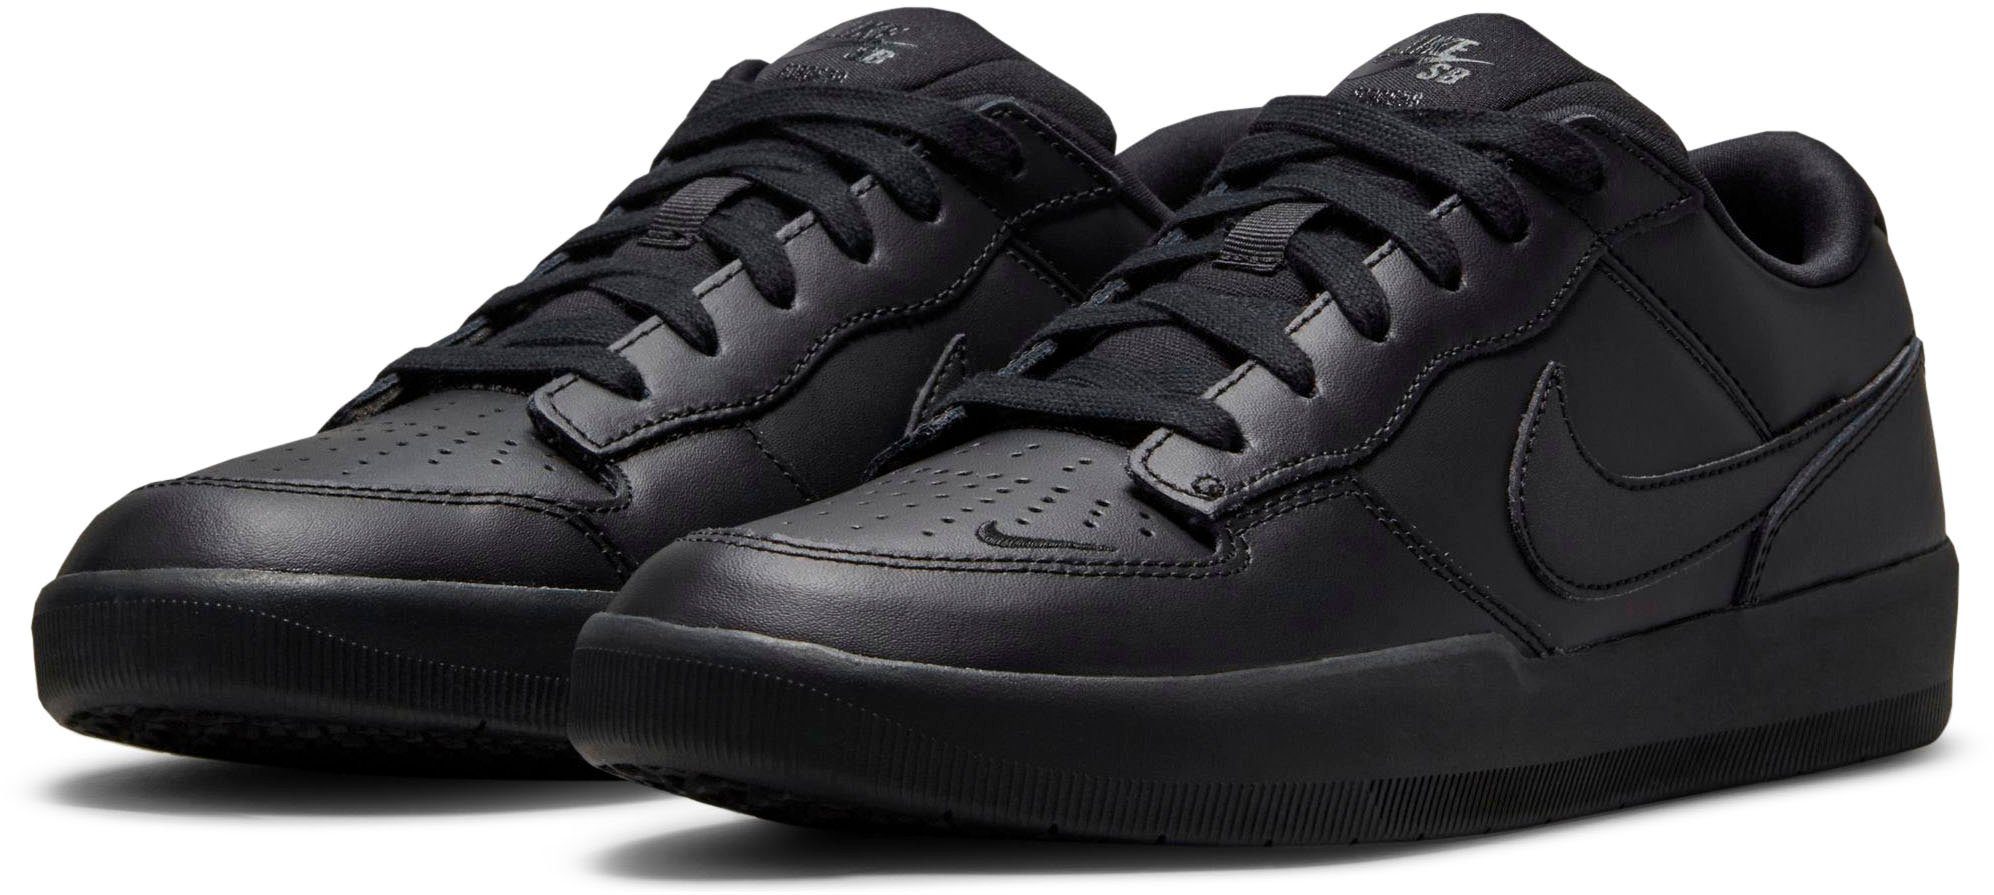 Nike SB »SB FORCE 58 PREMIUM LEATHER« Sneaker | OTTO